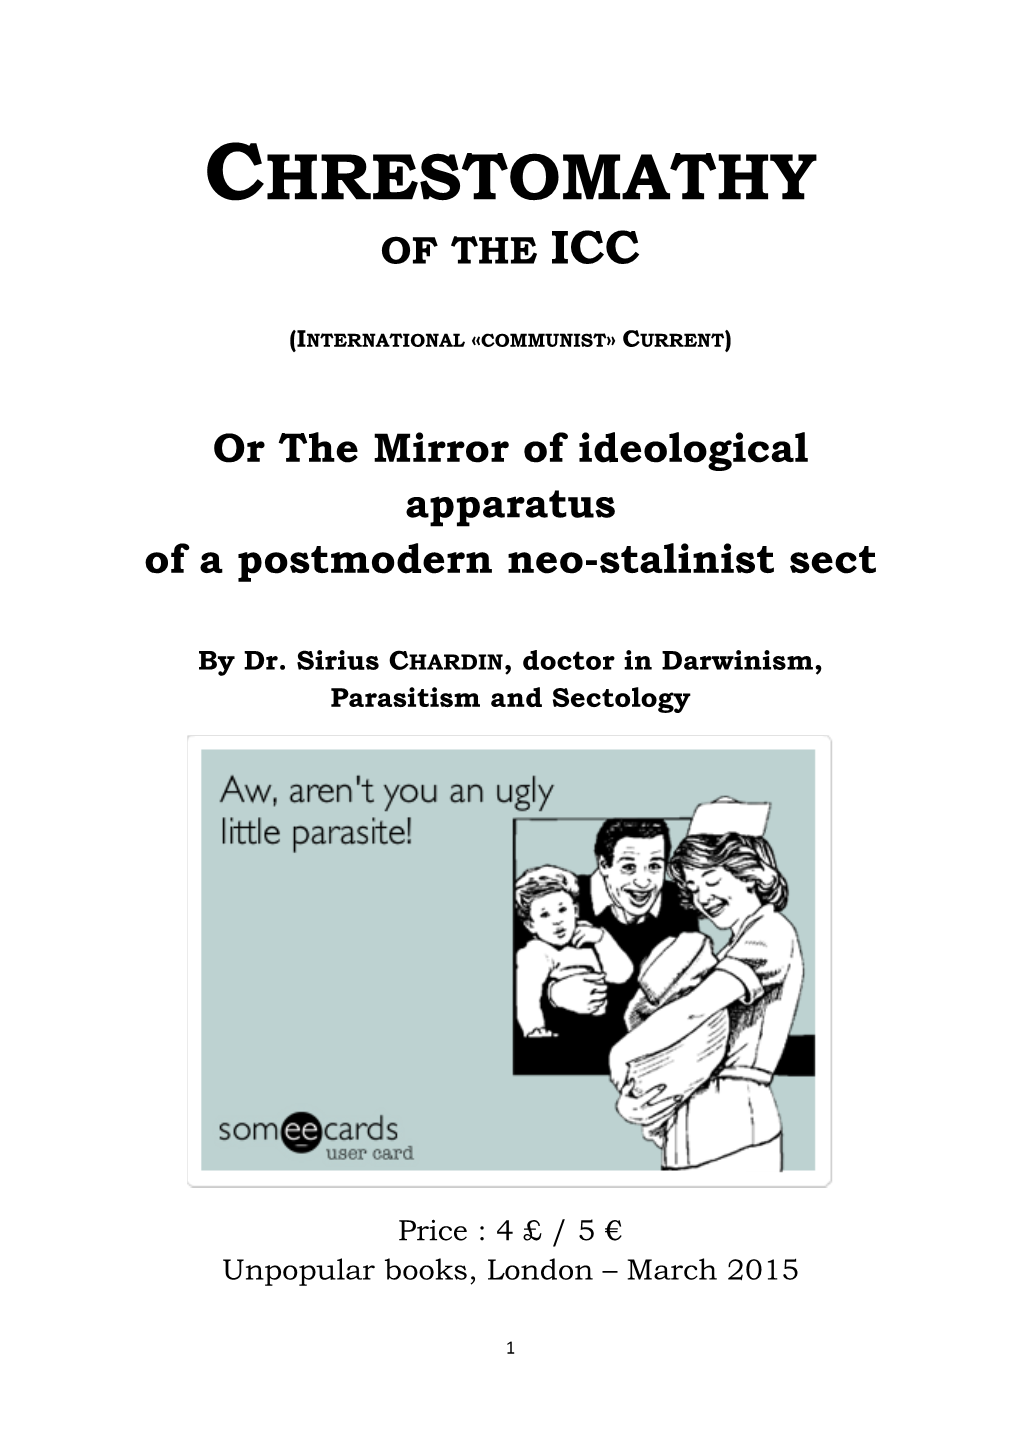 Chrestomathy of the Icc